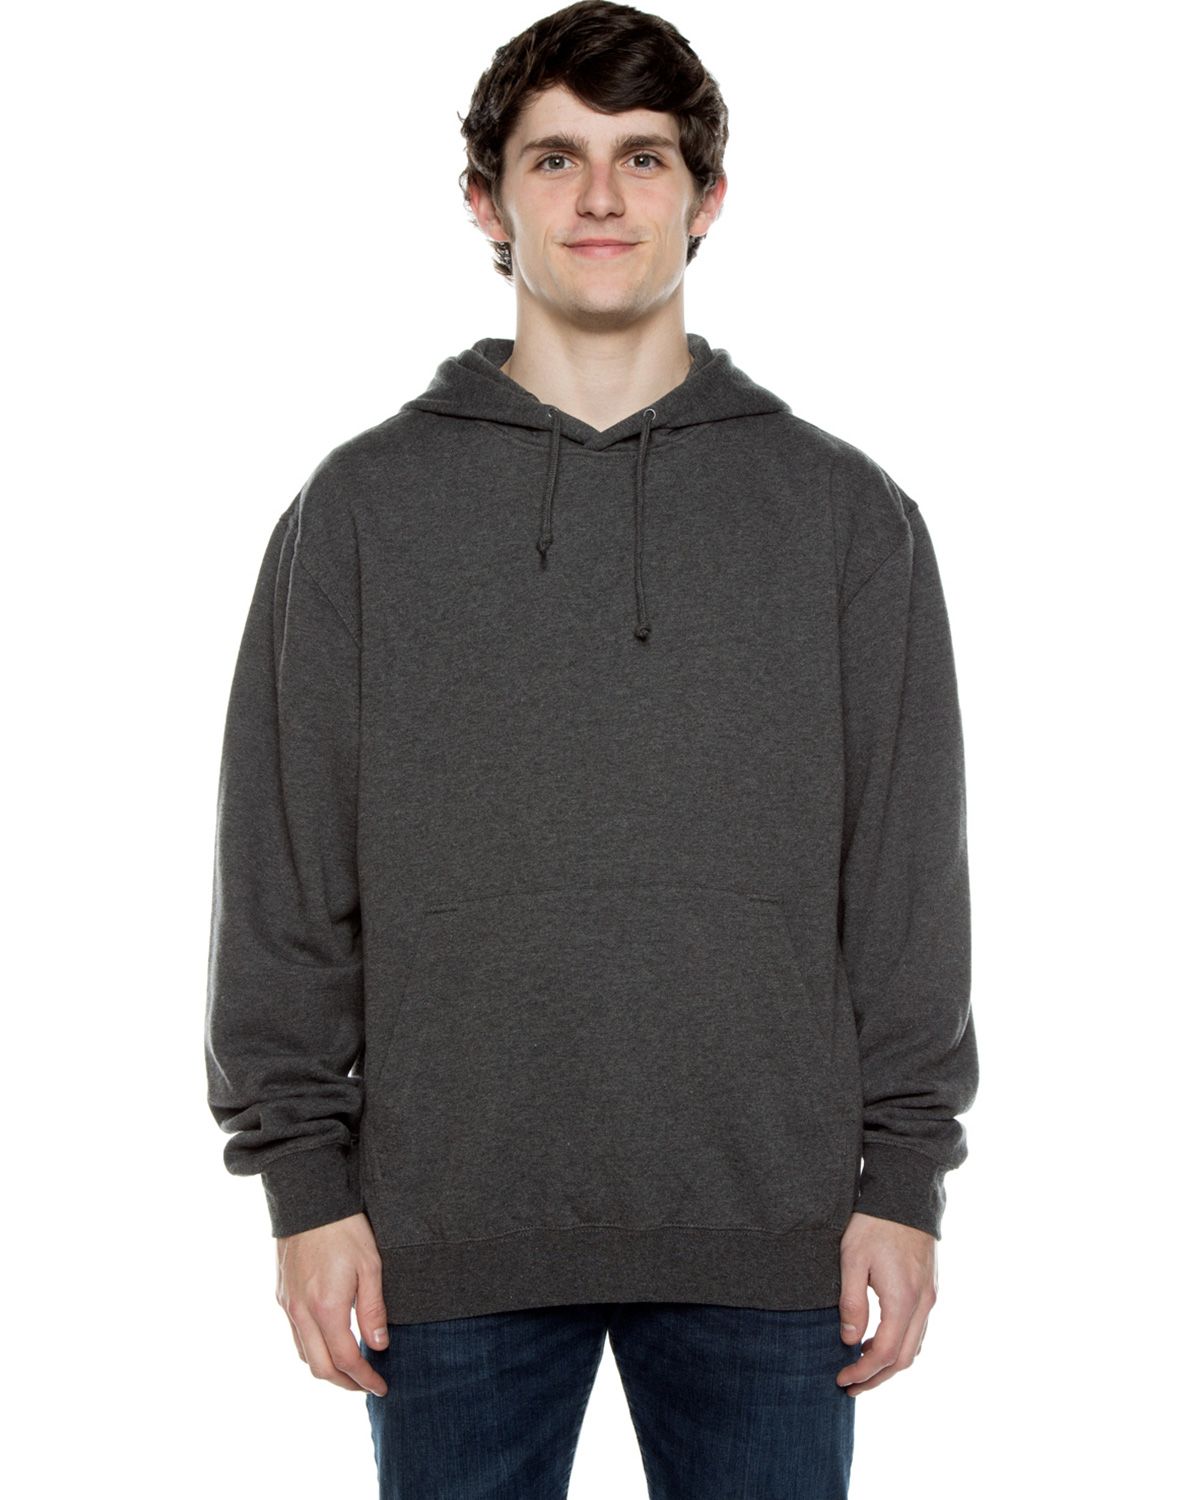 Beimar F1021 Unisex 8.25 oz. 80/20 Poly/Cotton Hooded Sweatshirt